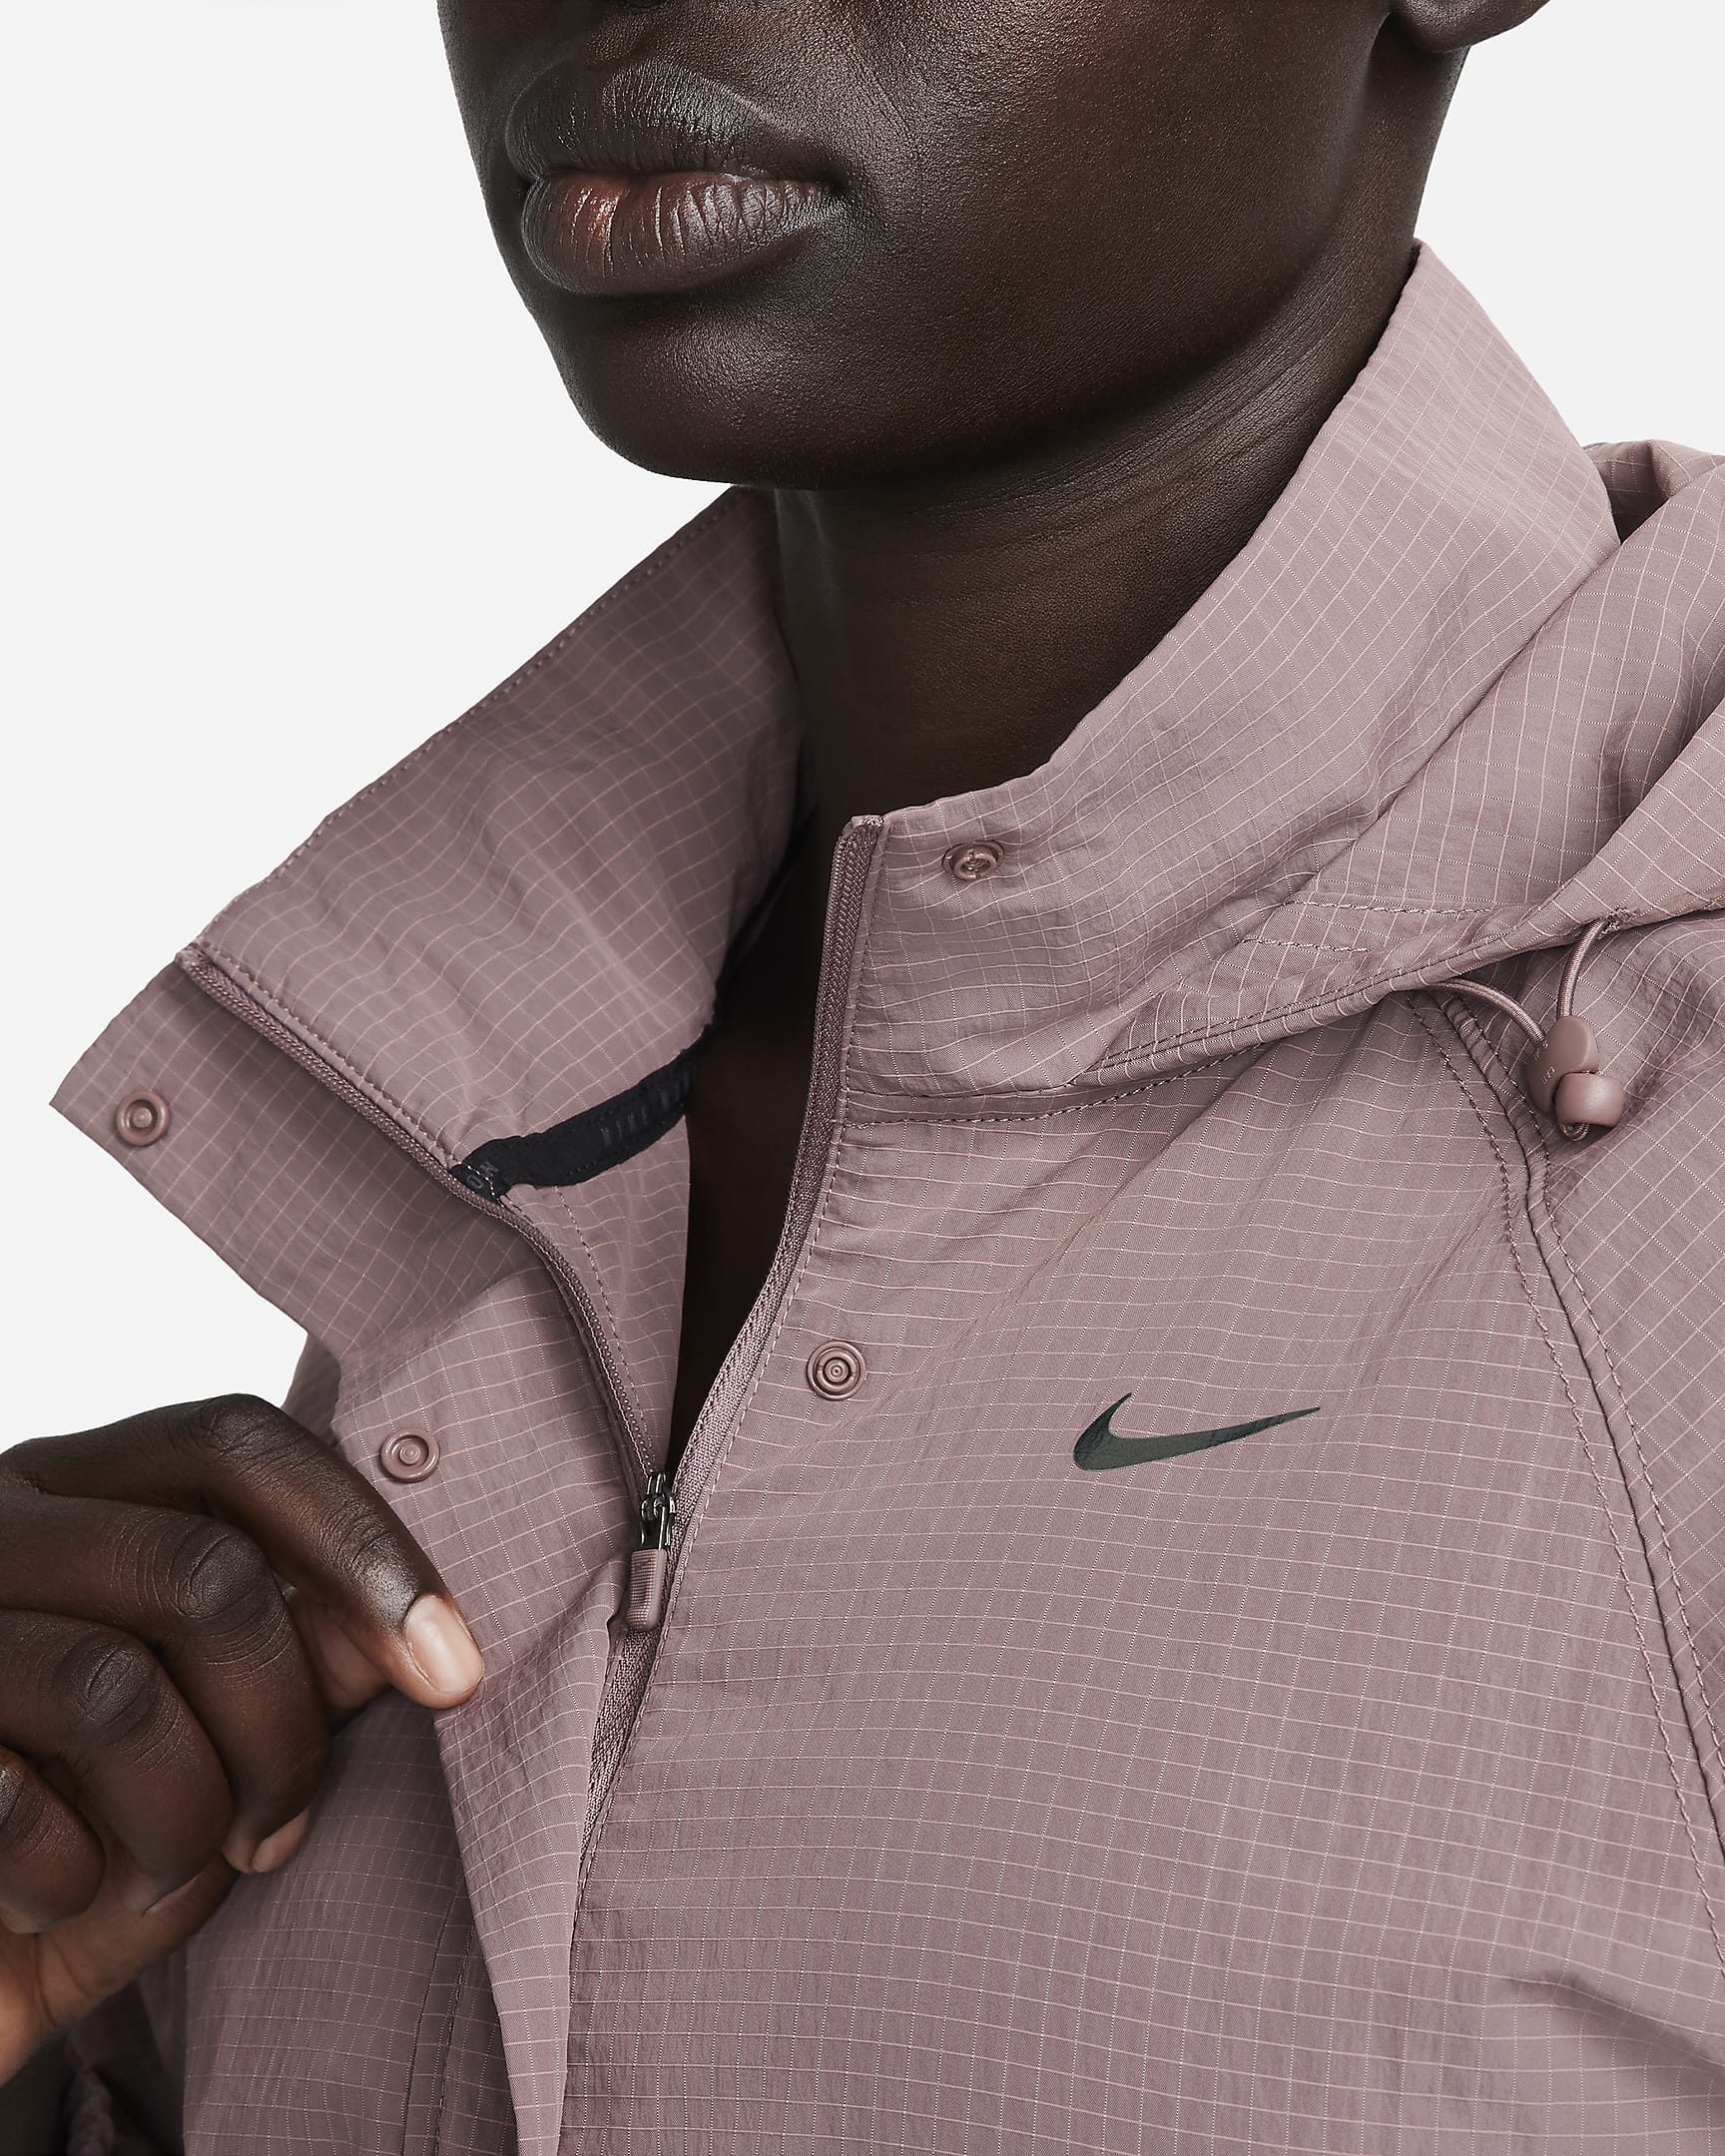 Nike Running Division Women's Repel Jacket - Smokey Mauve/Black